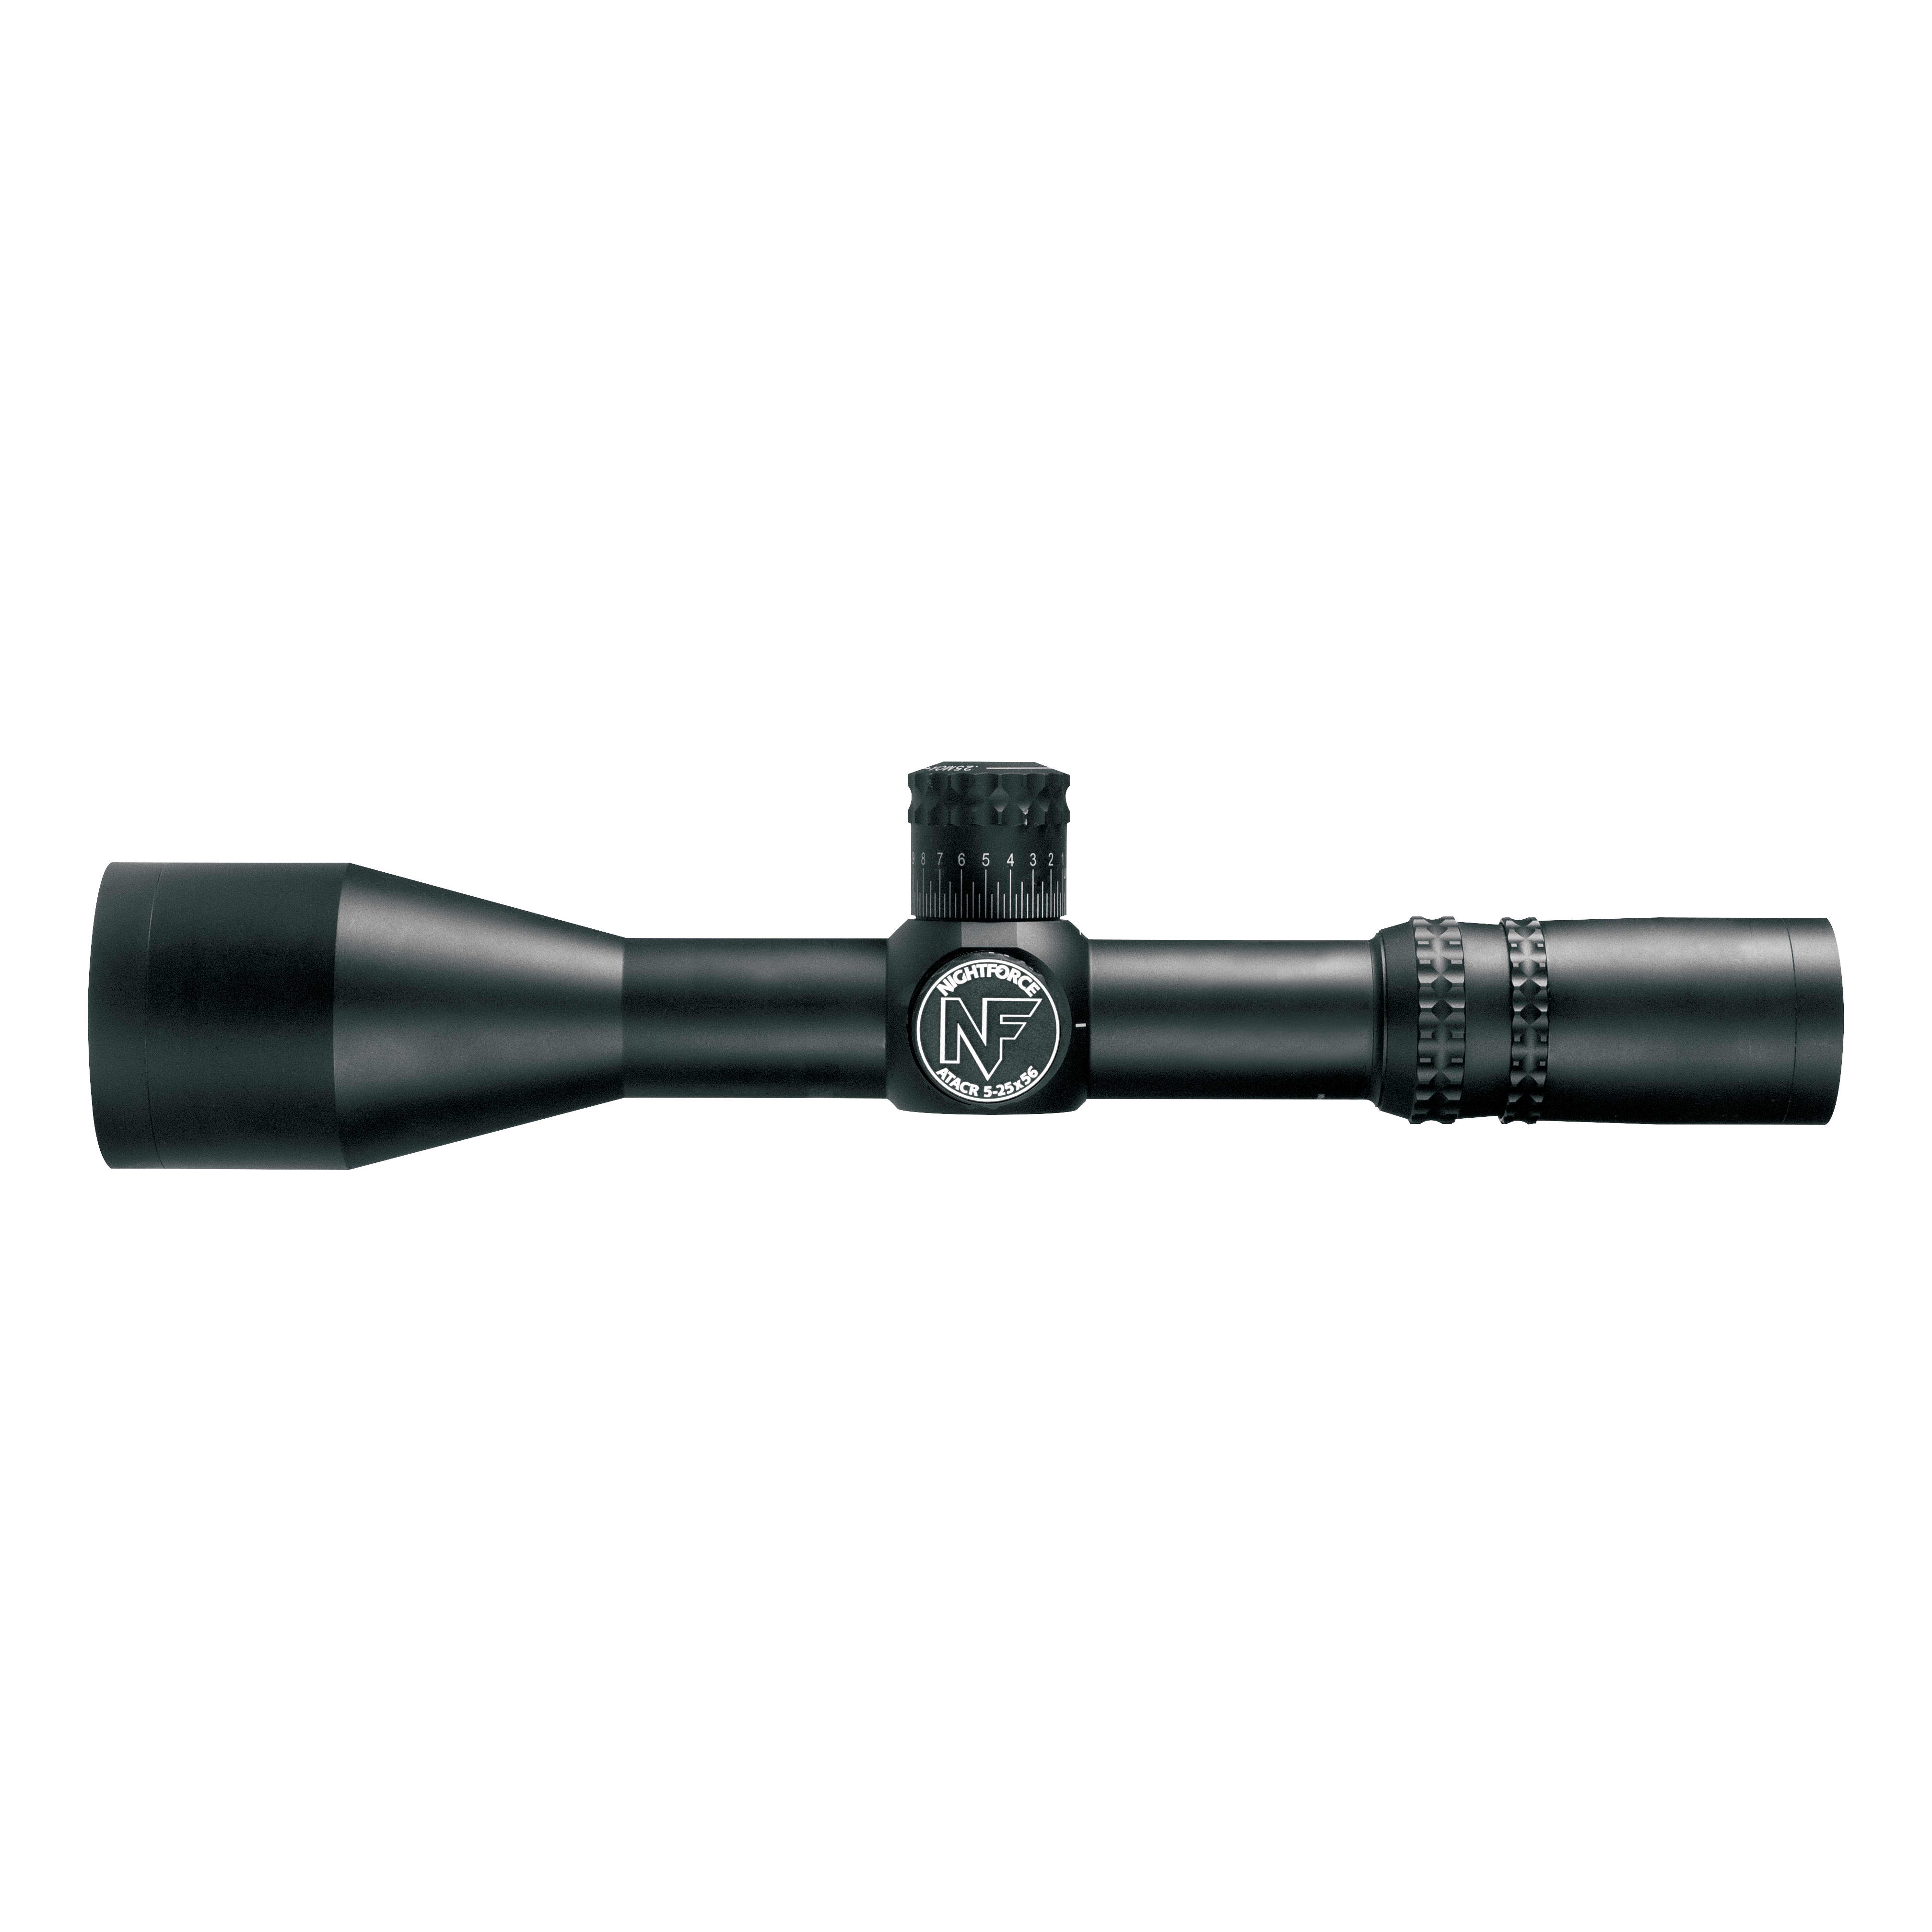 Nightforce 34mm ATACR® Riflescope - 5-25x56mm - MOAR